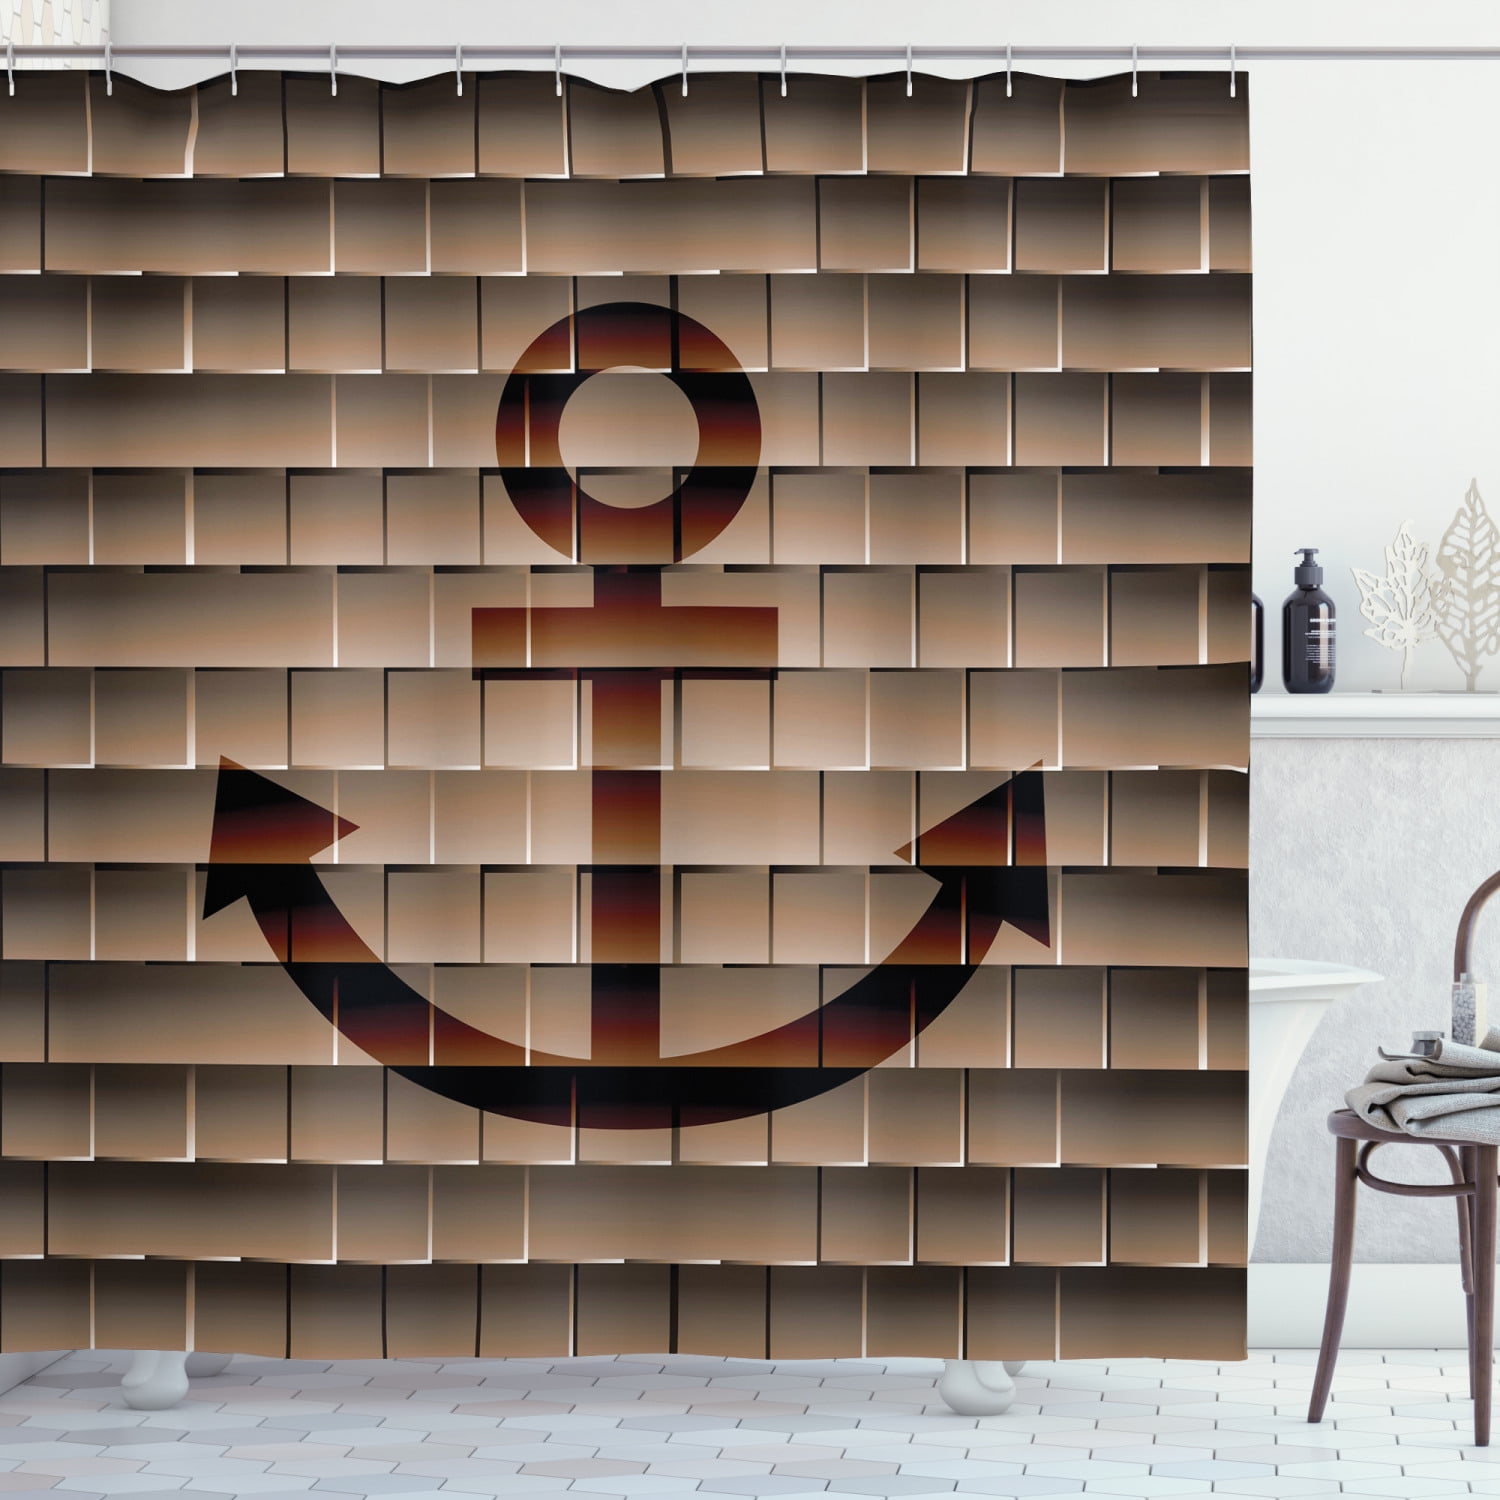 72x72"Anchor Soul Captain Polyester Fabric SHOWER CURTAIN Bathroom MAT HOOK SET 